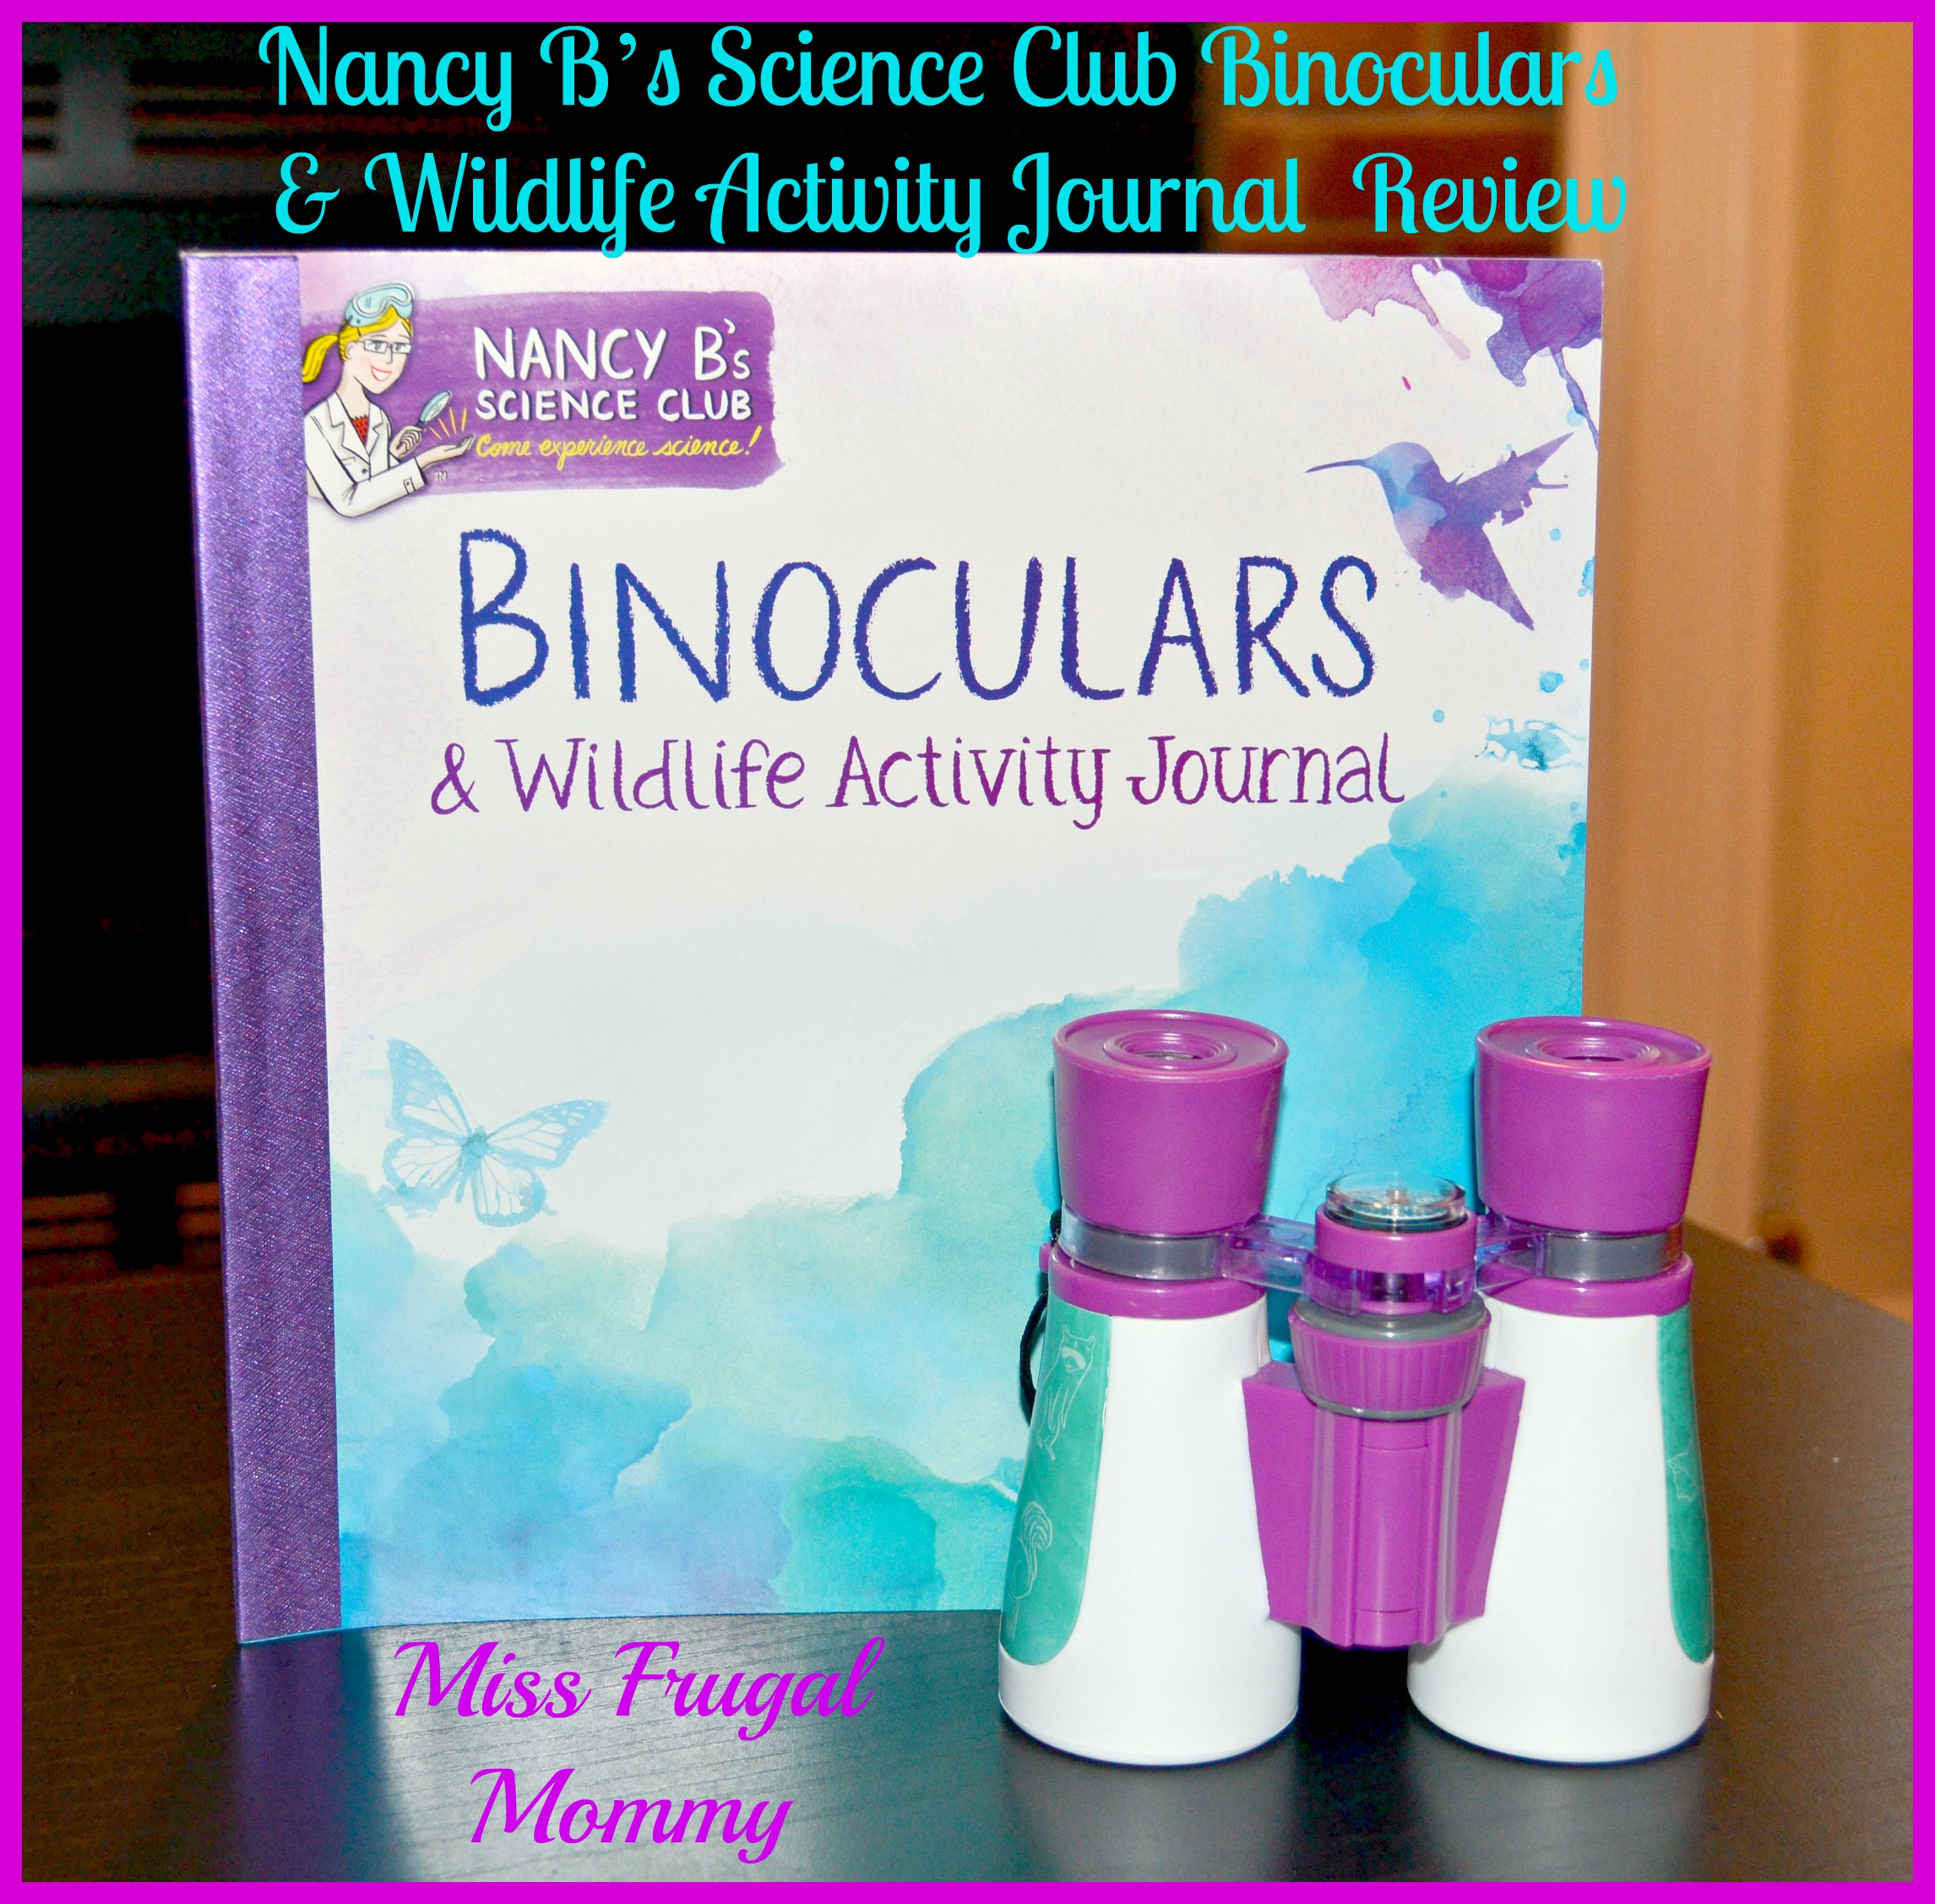 Nancy B’s Science Club Binoculars & Wildlife Activity Journal Review